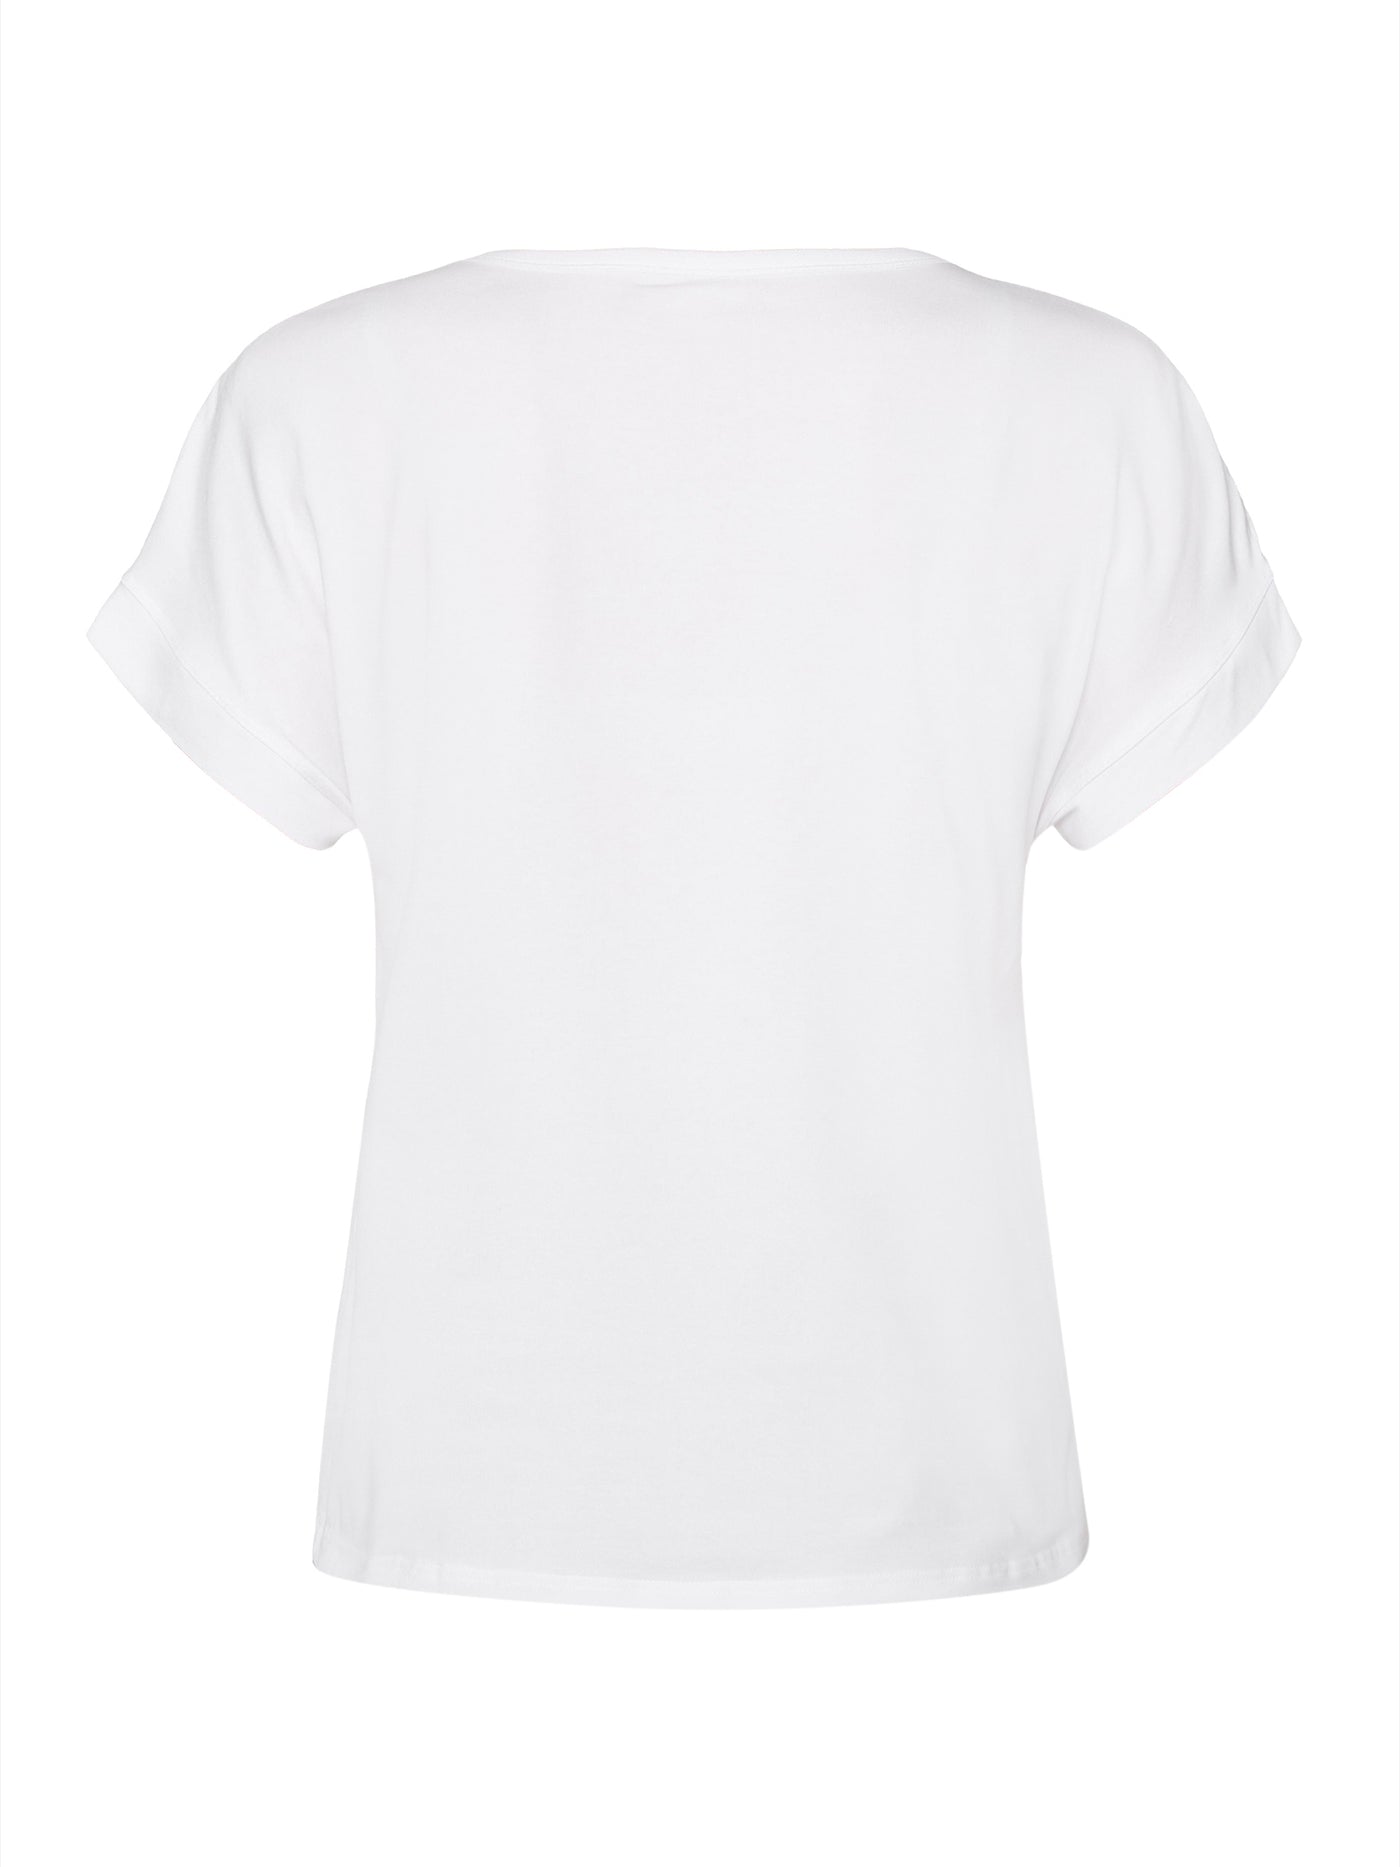 T-shirt - Front Print - White